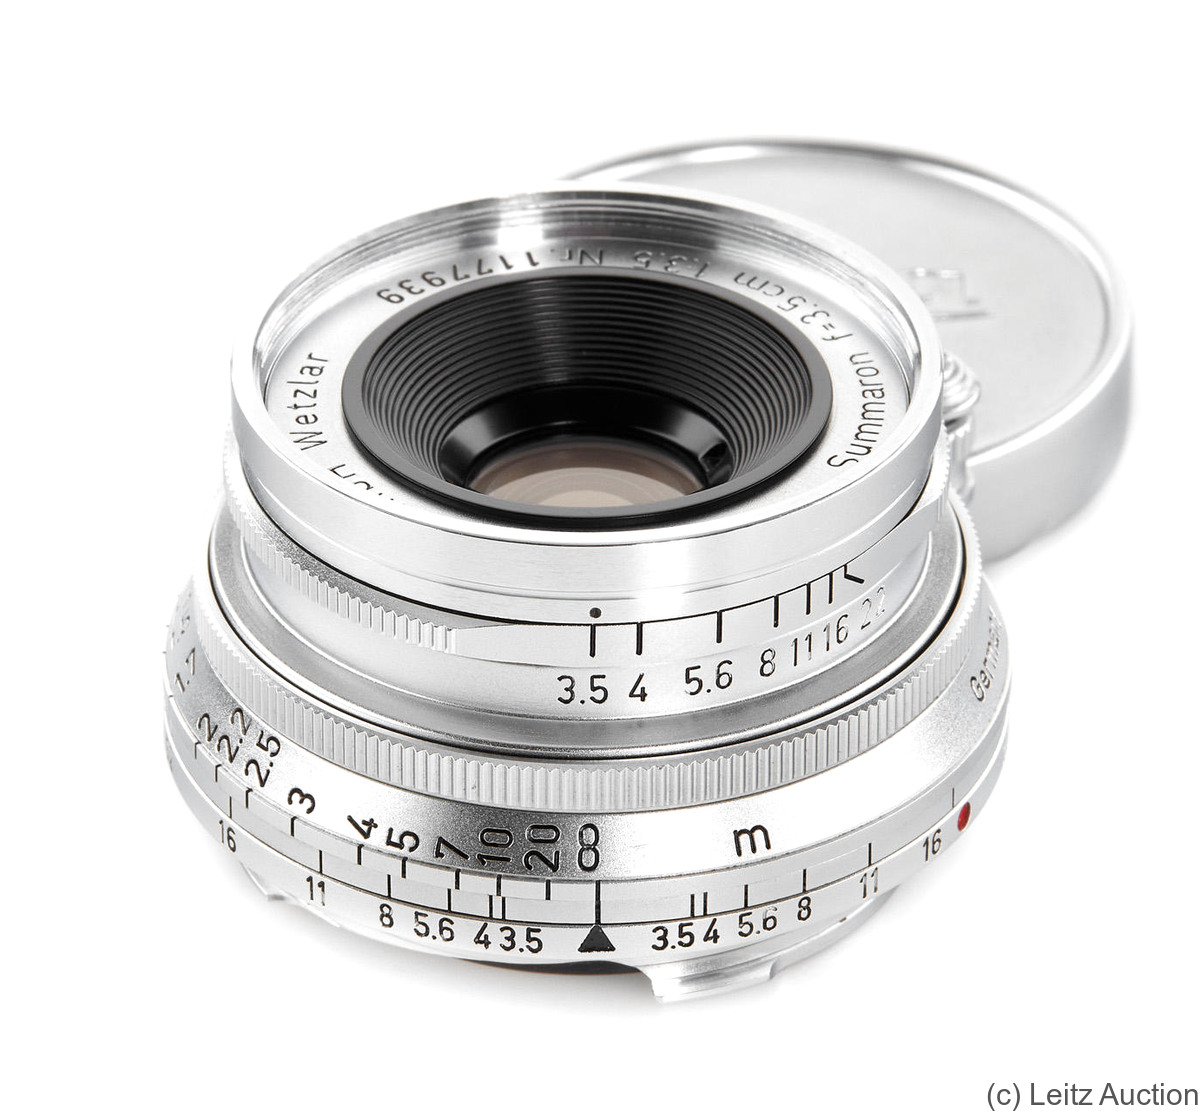 Leitz: 35mm (3.5cm) f3.5 Summaron (BM, early) camera